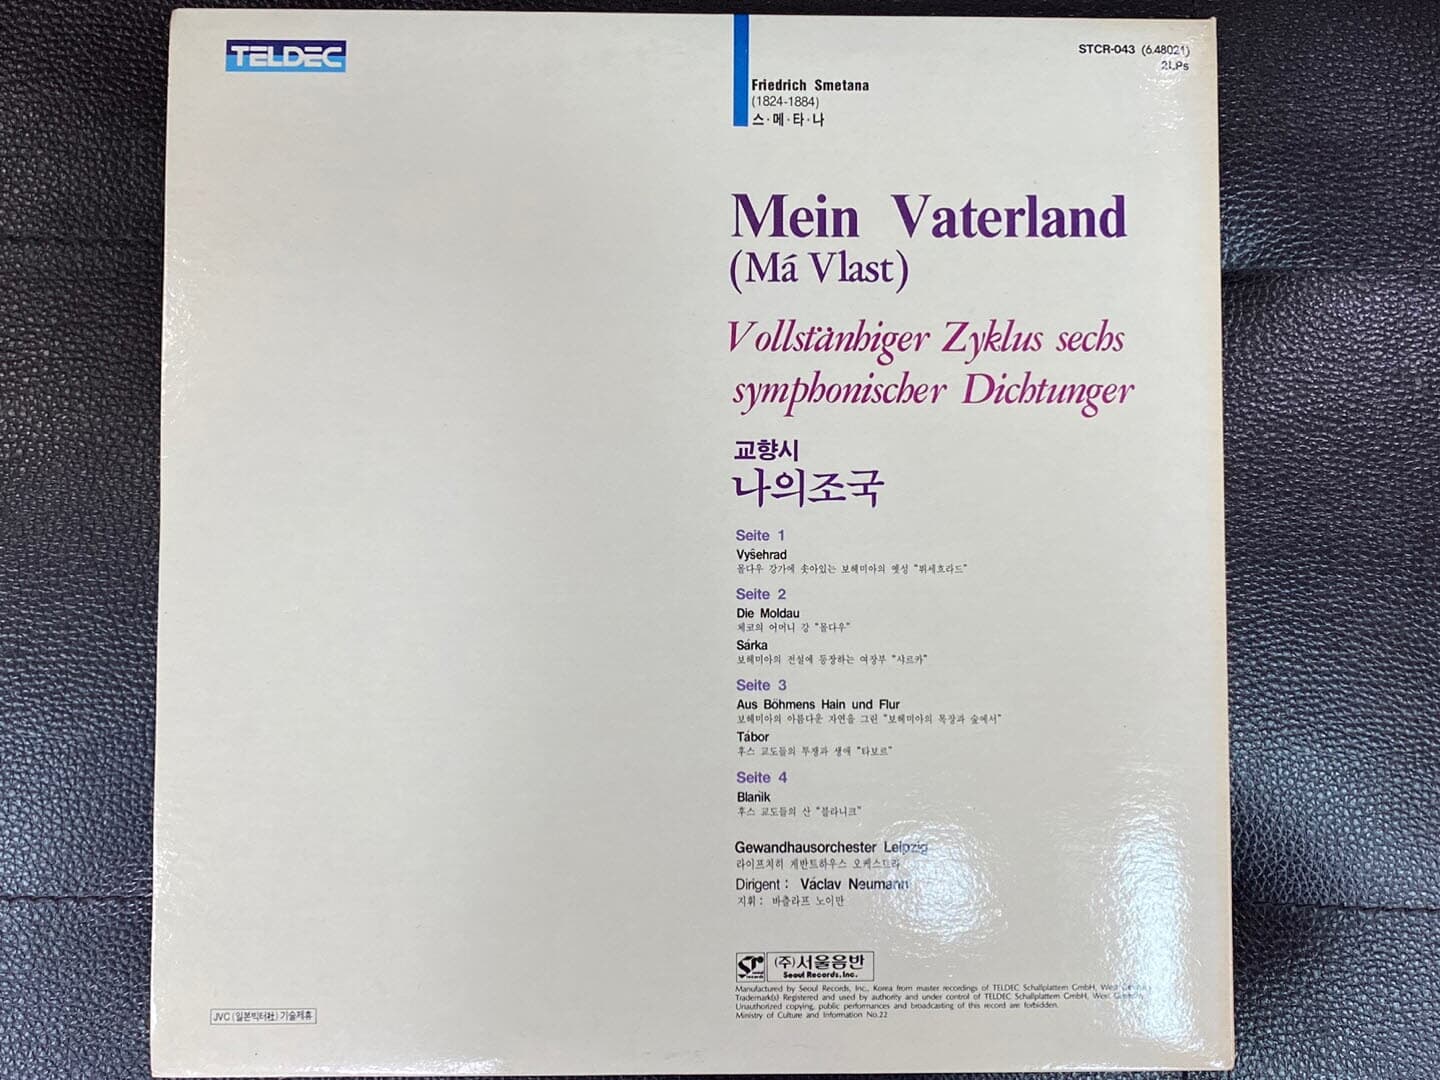 [LP] 바츨라프 노이만 - Vaclav Neumann - Smetana Ma Vlast Mein 2Lps [서울-라이센스반]